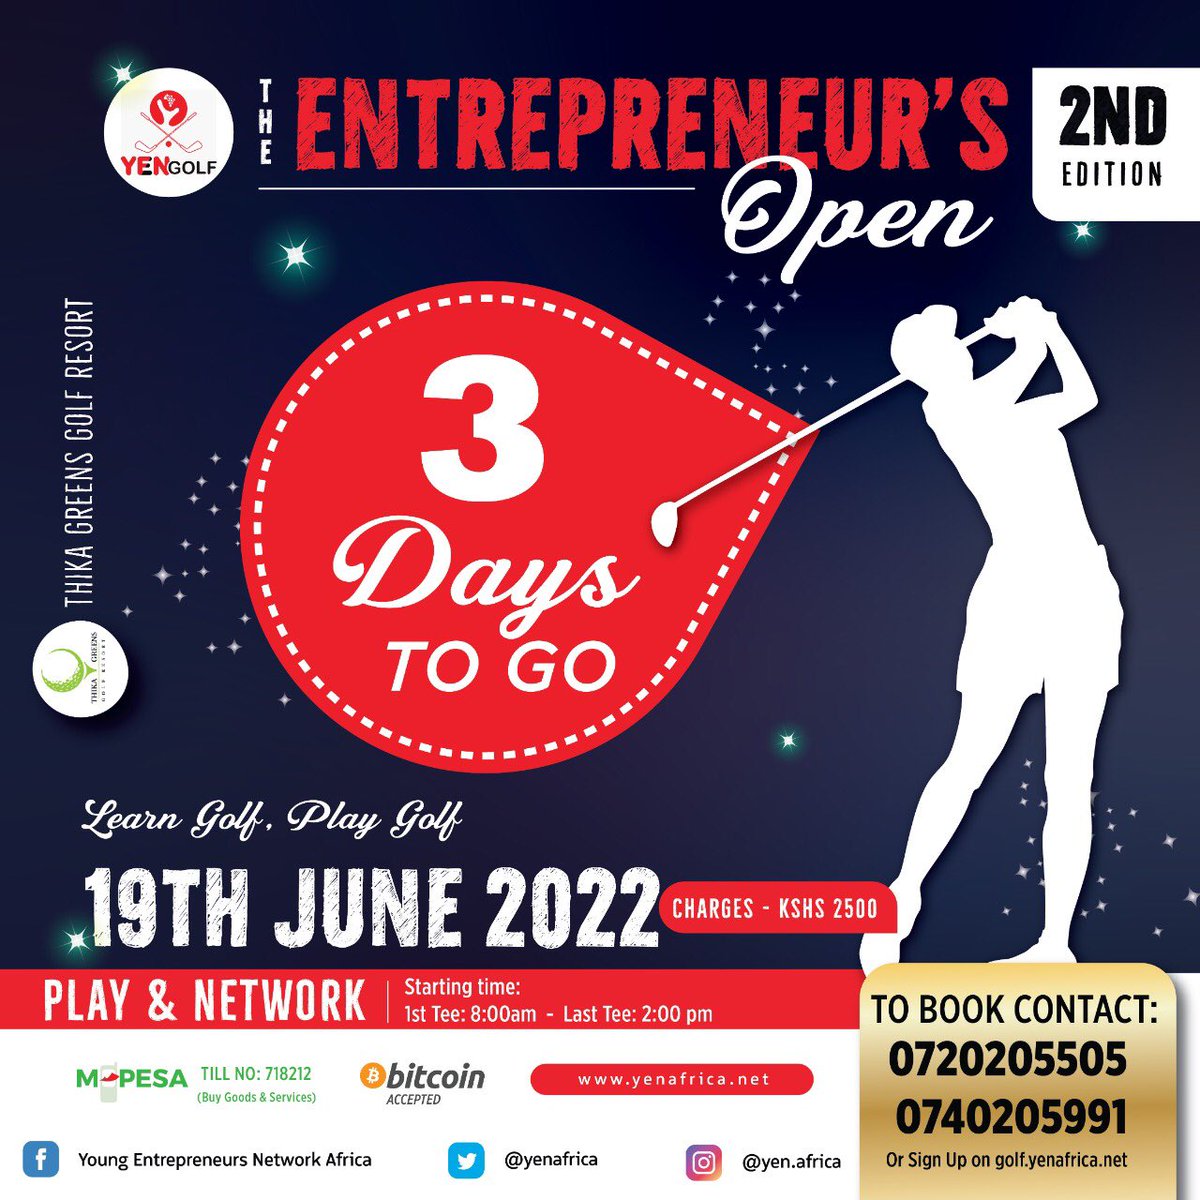 Only 3 days to go. ✍️ Register here 👉  bit.ly/3HkQySk

#YENGolf #YENGolfTournament #EntrepreneursOpen #Golf #GolfinKenya #GolfGame